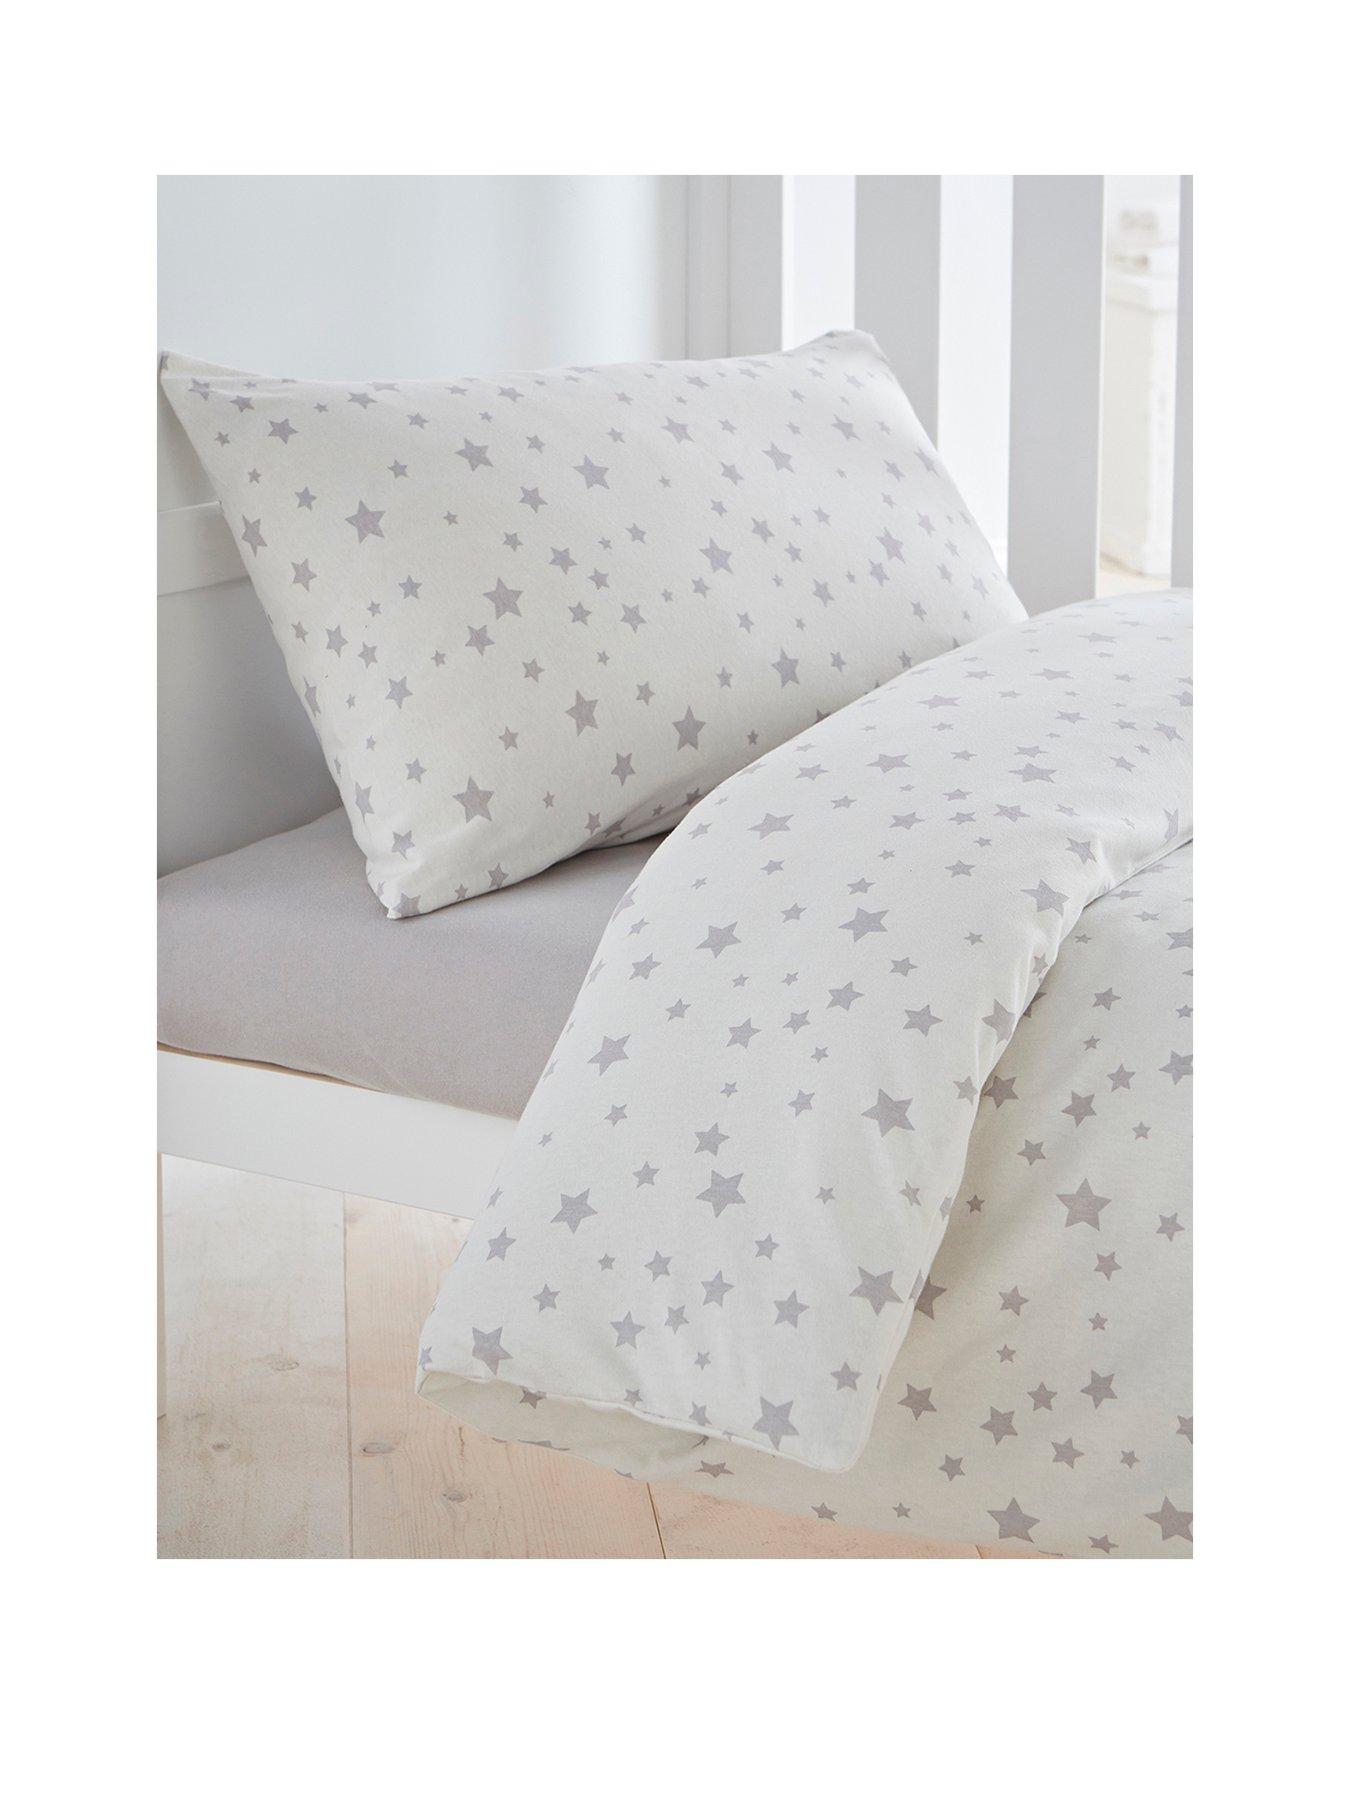 grey star cot bedding